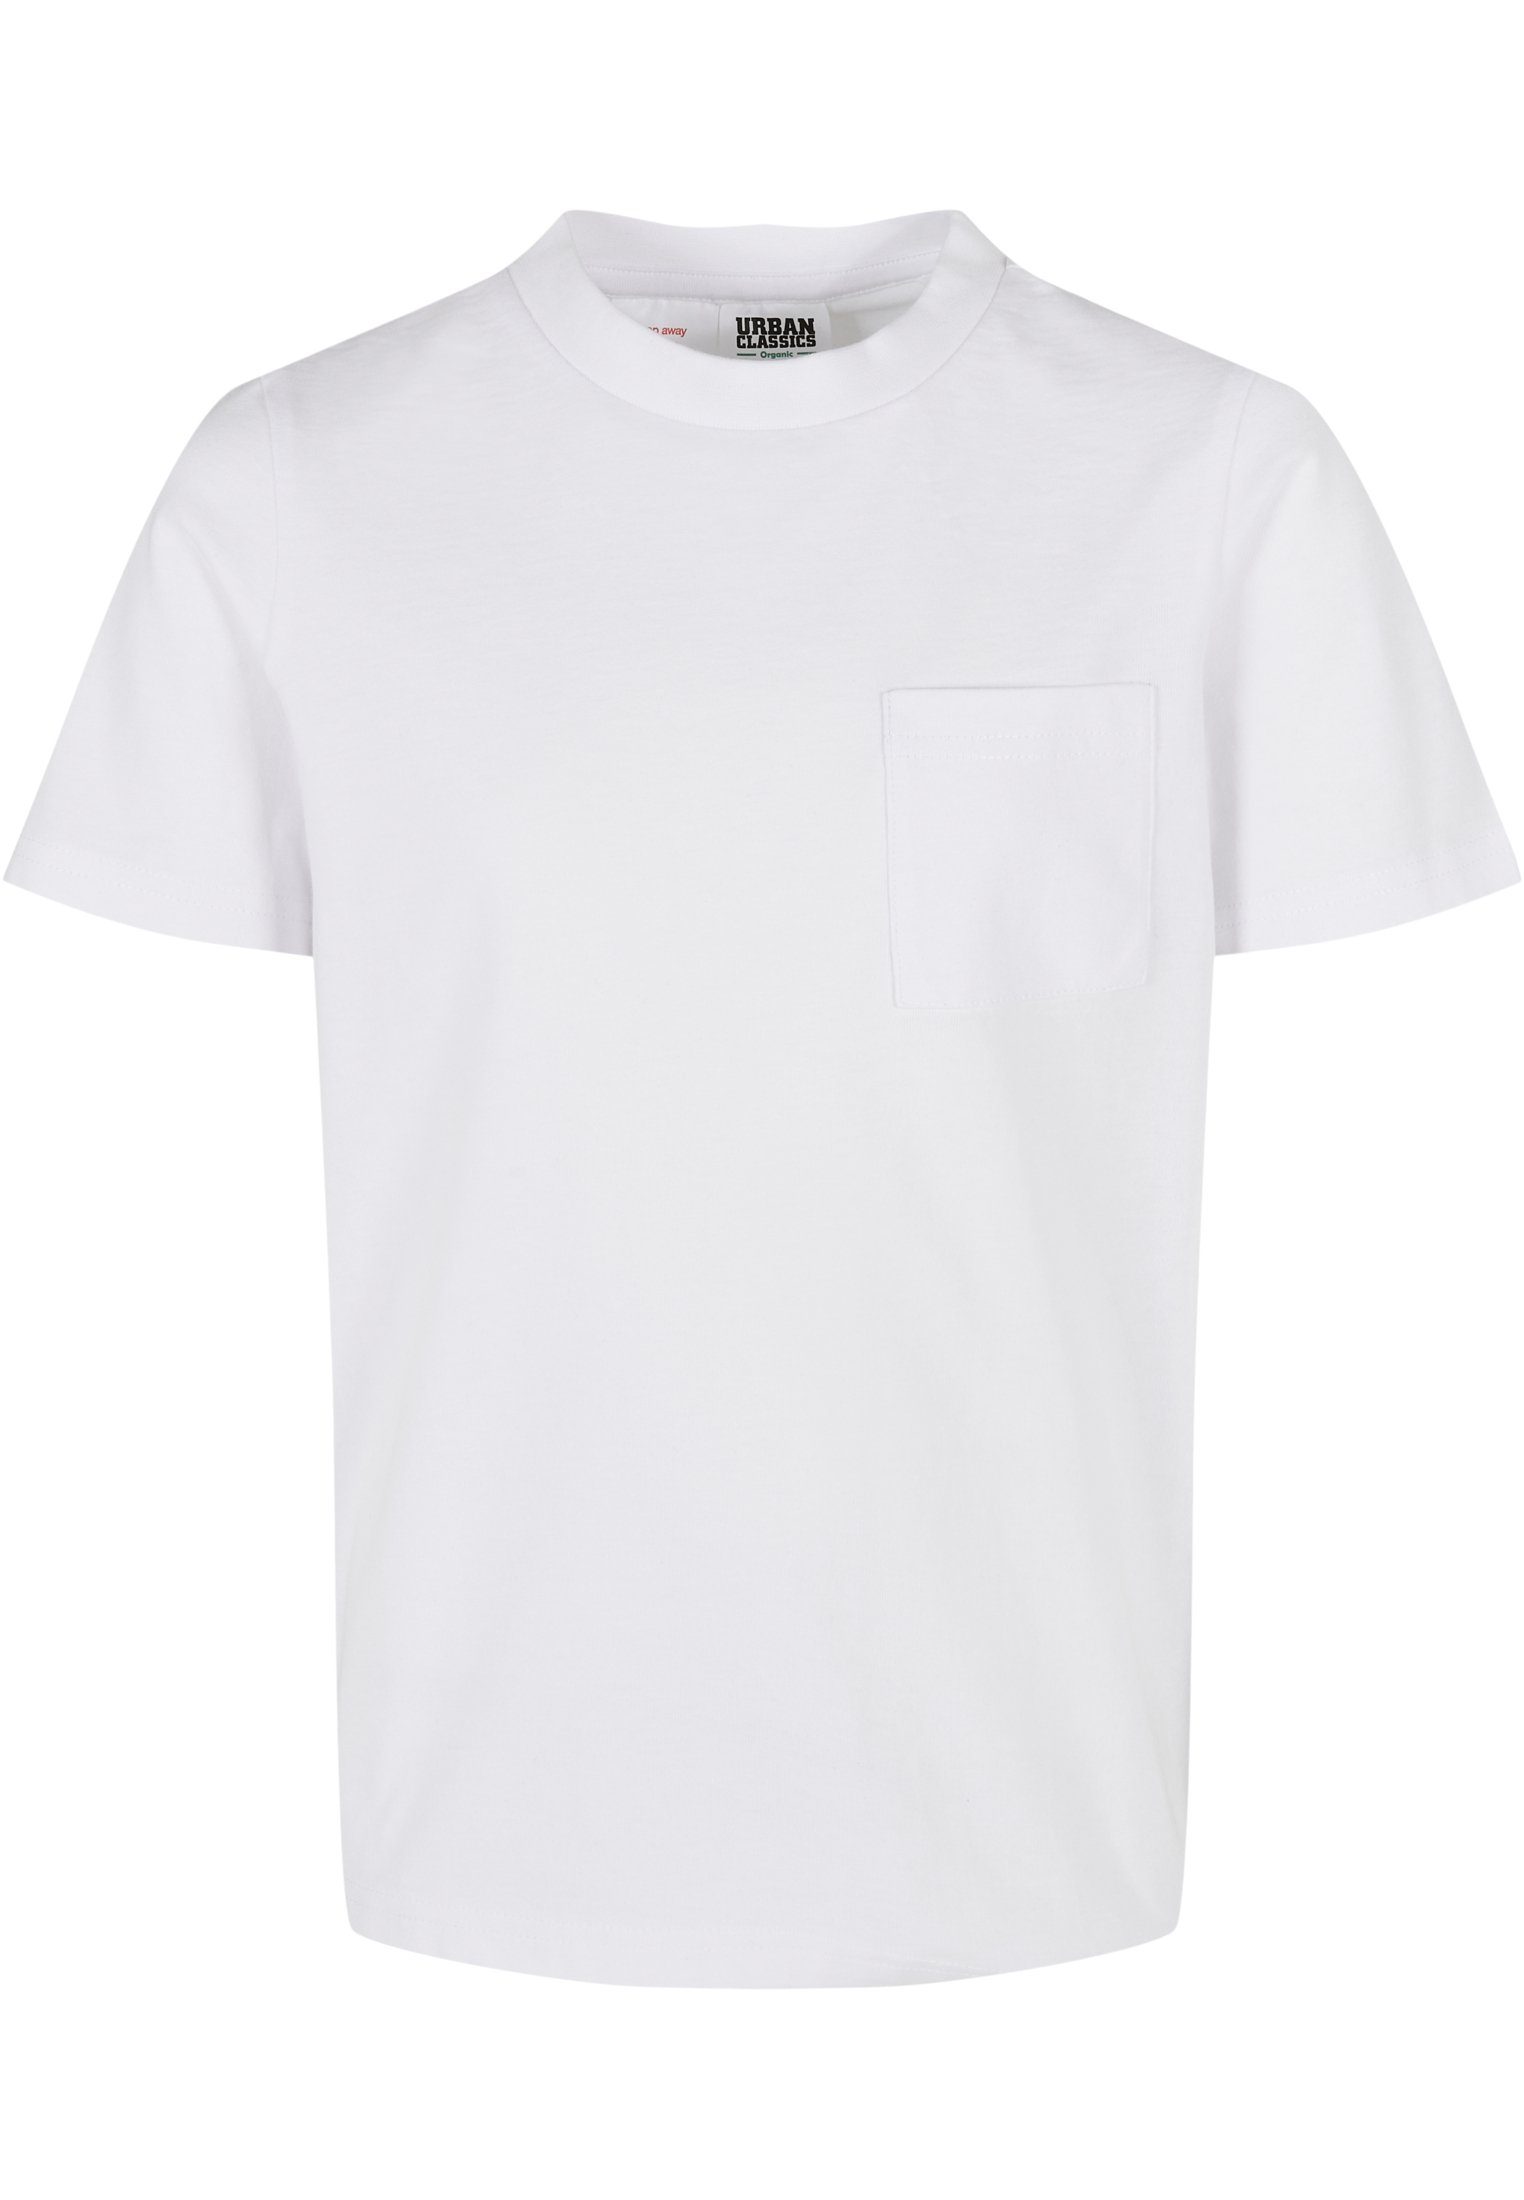 Tee Cotton Baumwollmischung CLASSICS aus 2-Pack (1-tlg), URBAN Basic Stylisches Kurzarmshirt Kinder Boys angenehmer Pocket Organic T-Shirt